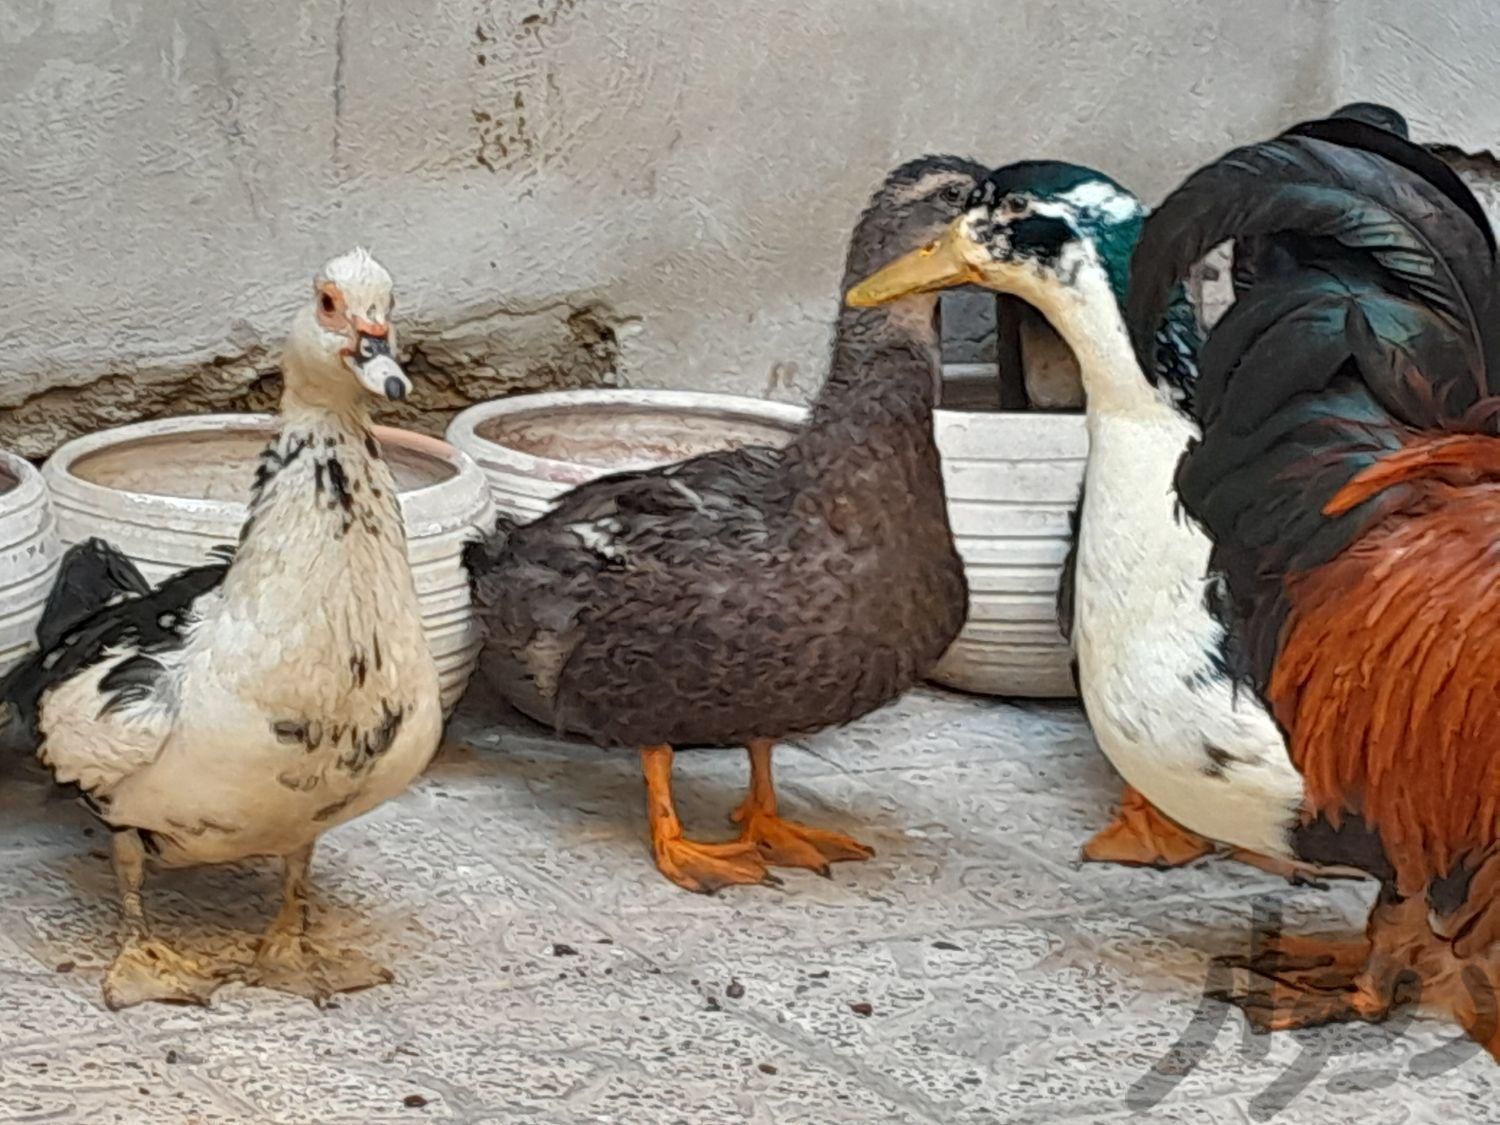 ارد اسرائیلی و اردک محلی|حیوانات مزرعه|قرچک, |دیوار